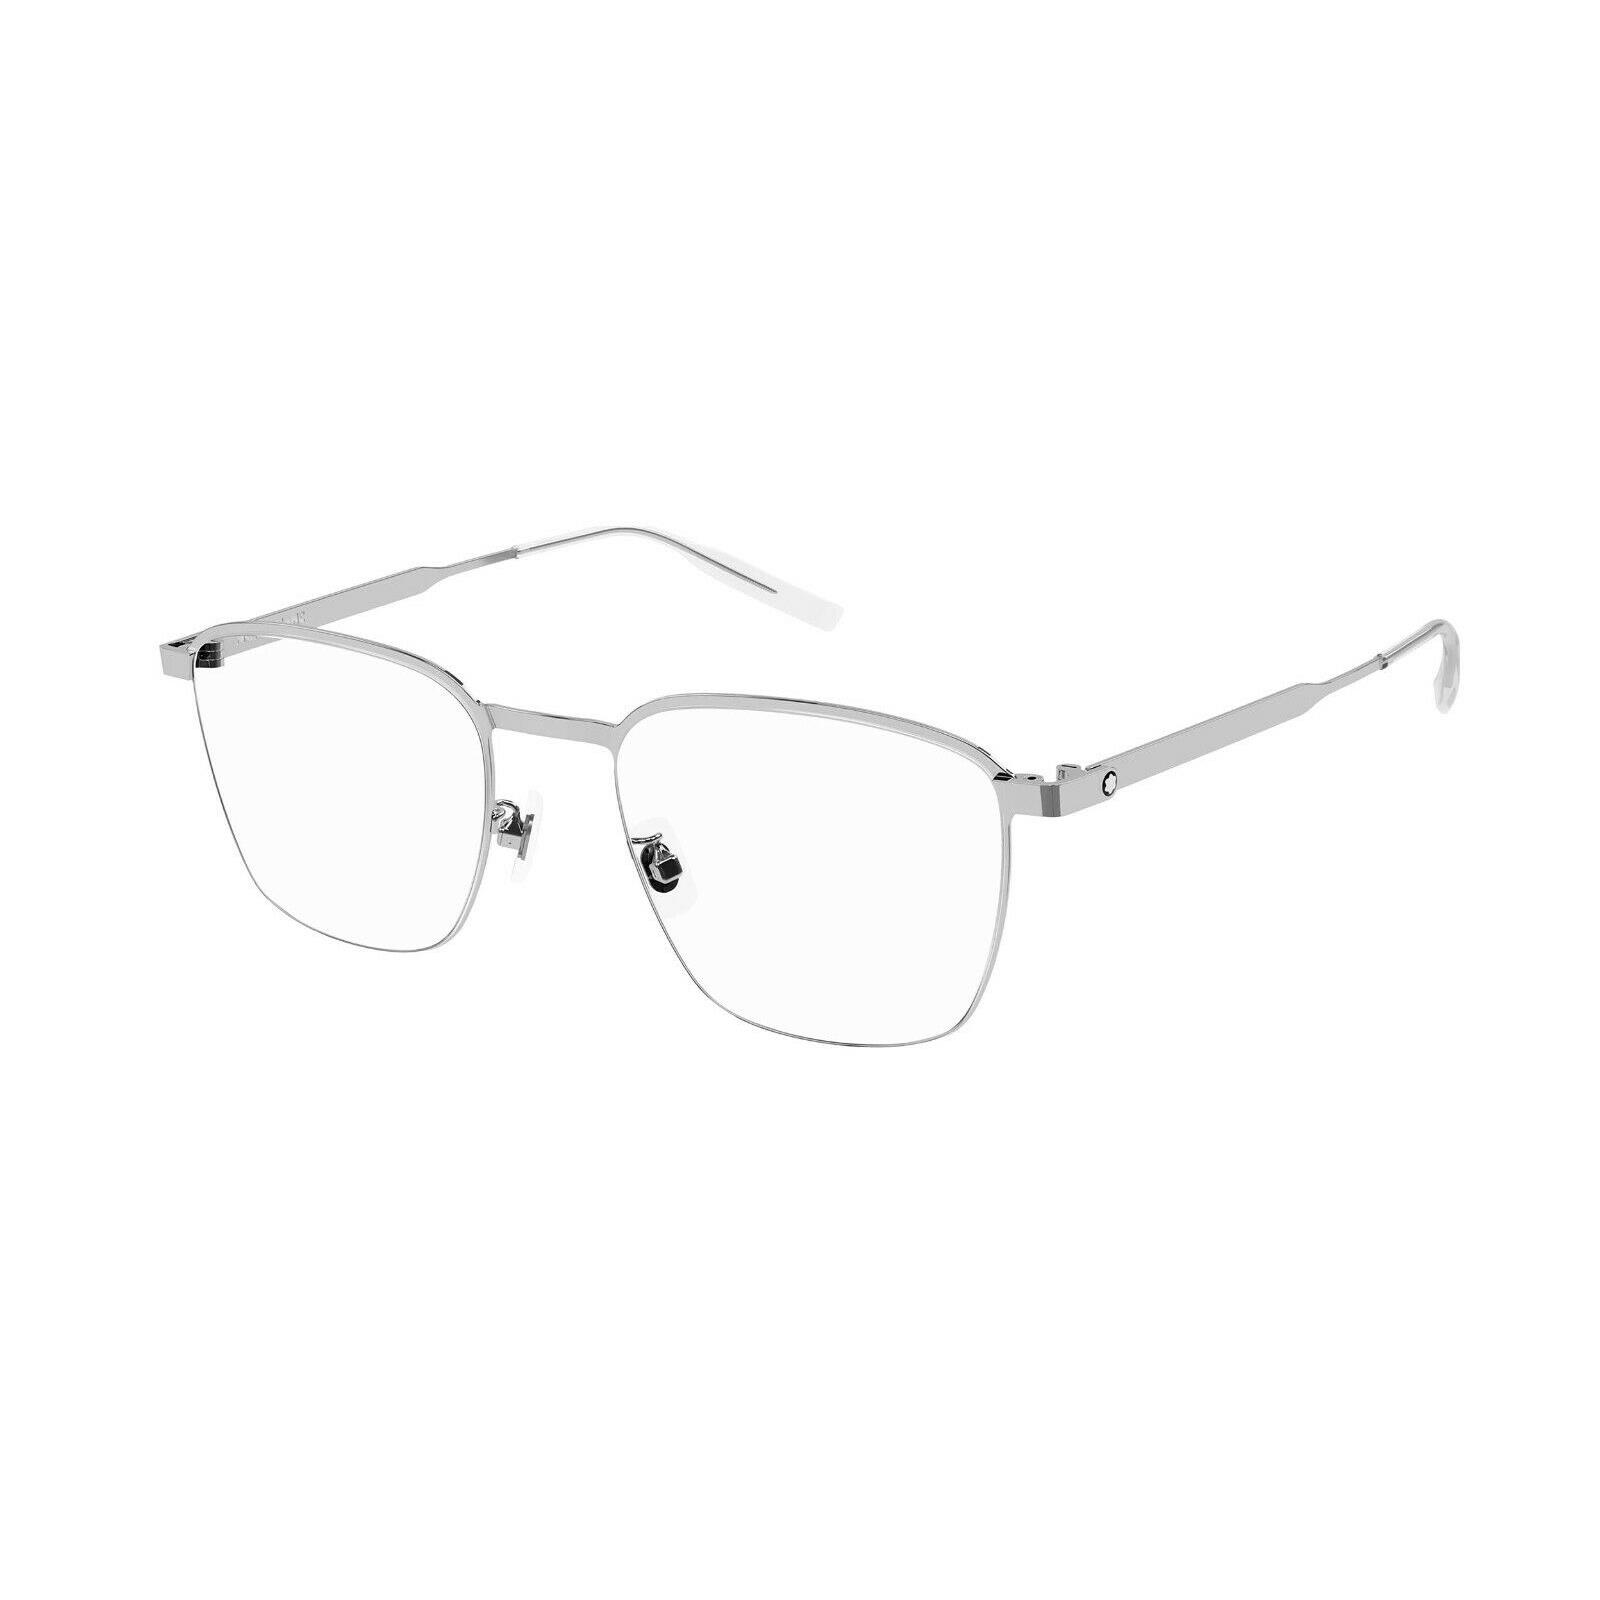 Montblanc Mont Blanc Eyeglasses MB0181o-002 Silver Frame Clear Lenses